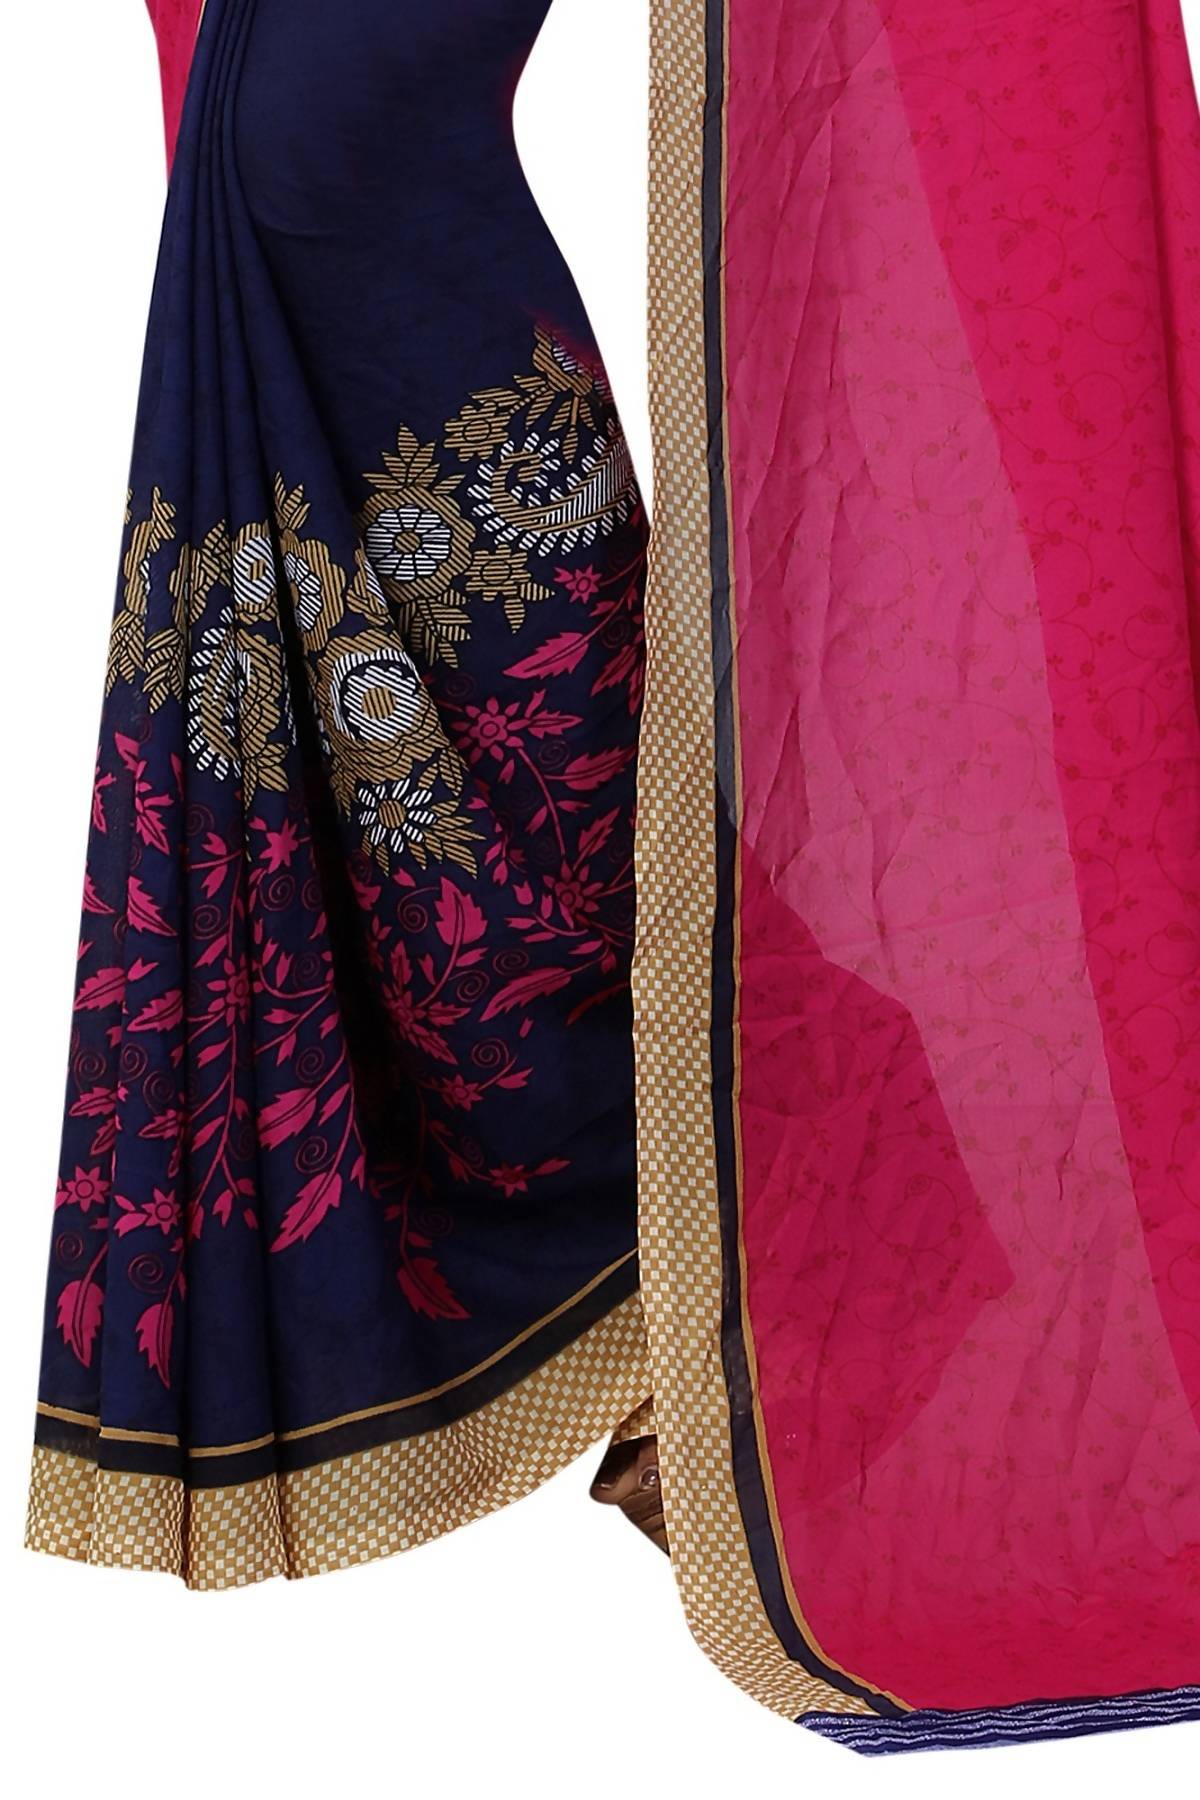 Women's Vamika Blue-Pink Georgette Printed Half & Half Saree Partly Rani - Vamika